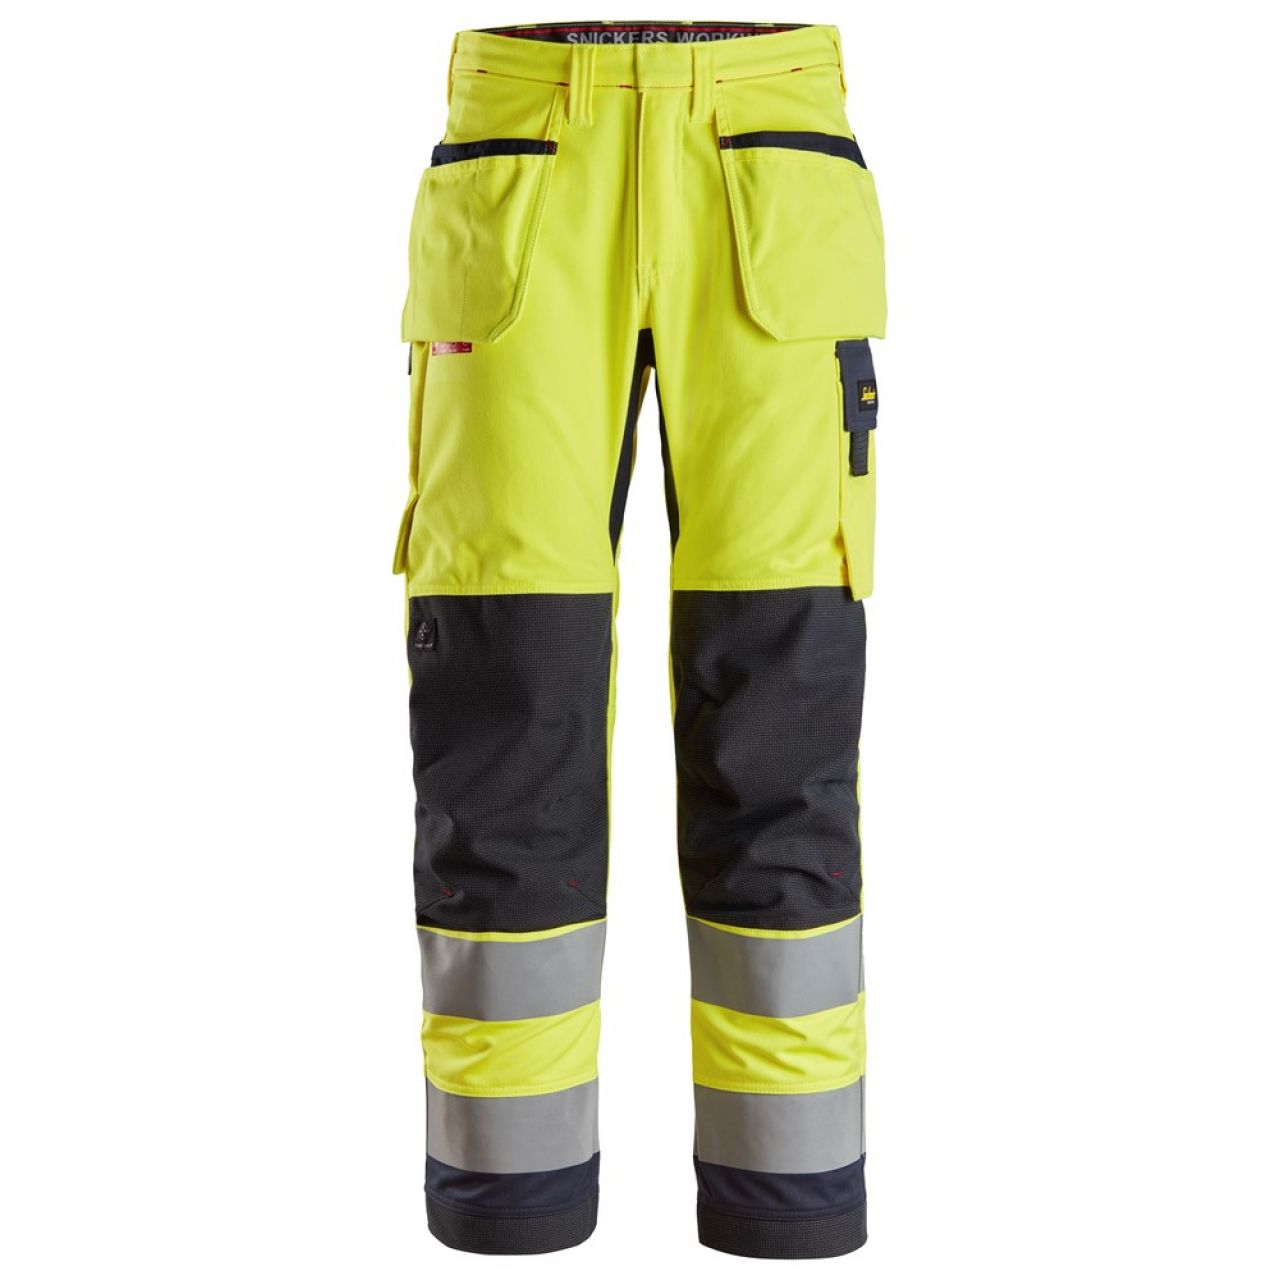 6260 Pantalones largos de trabajo de alta visibilidad clase 2 con bolsillos flotantes ProtecWork amarillo-azul marino talla 124